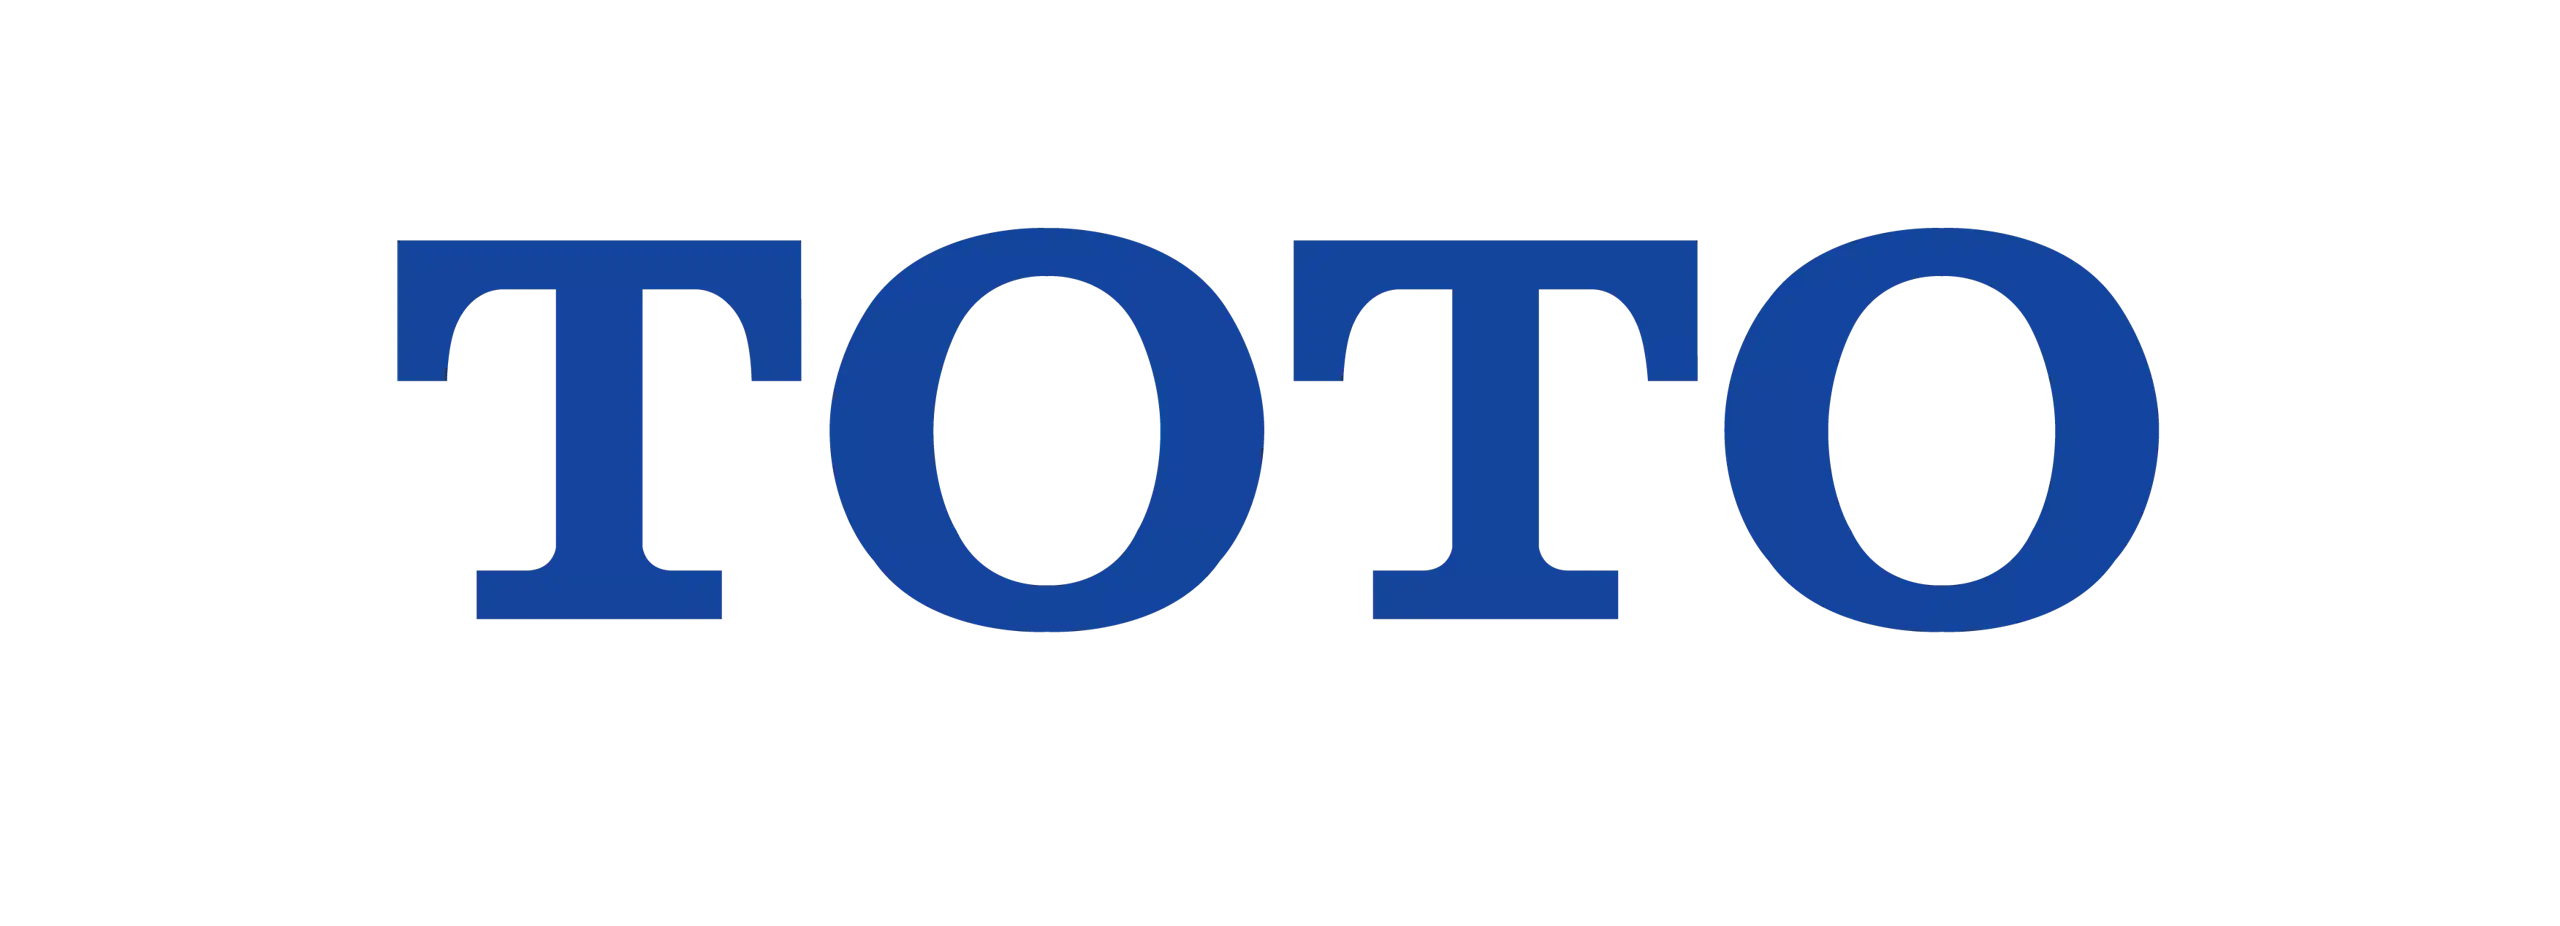 Toto logo - black